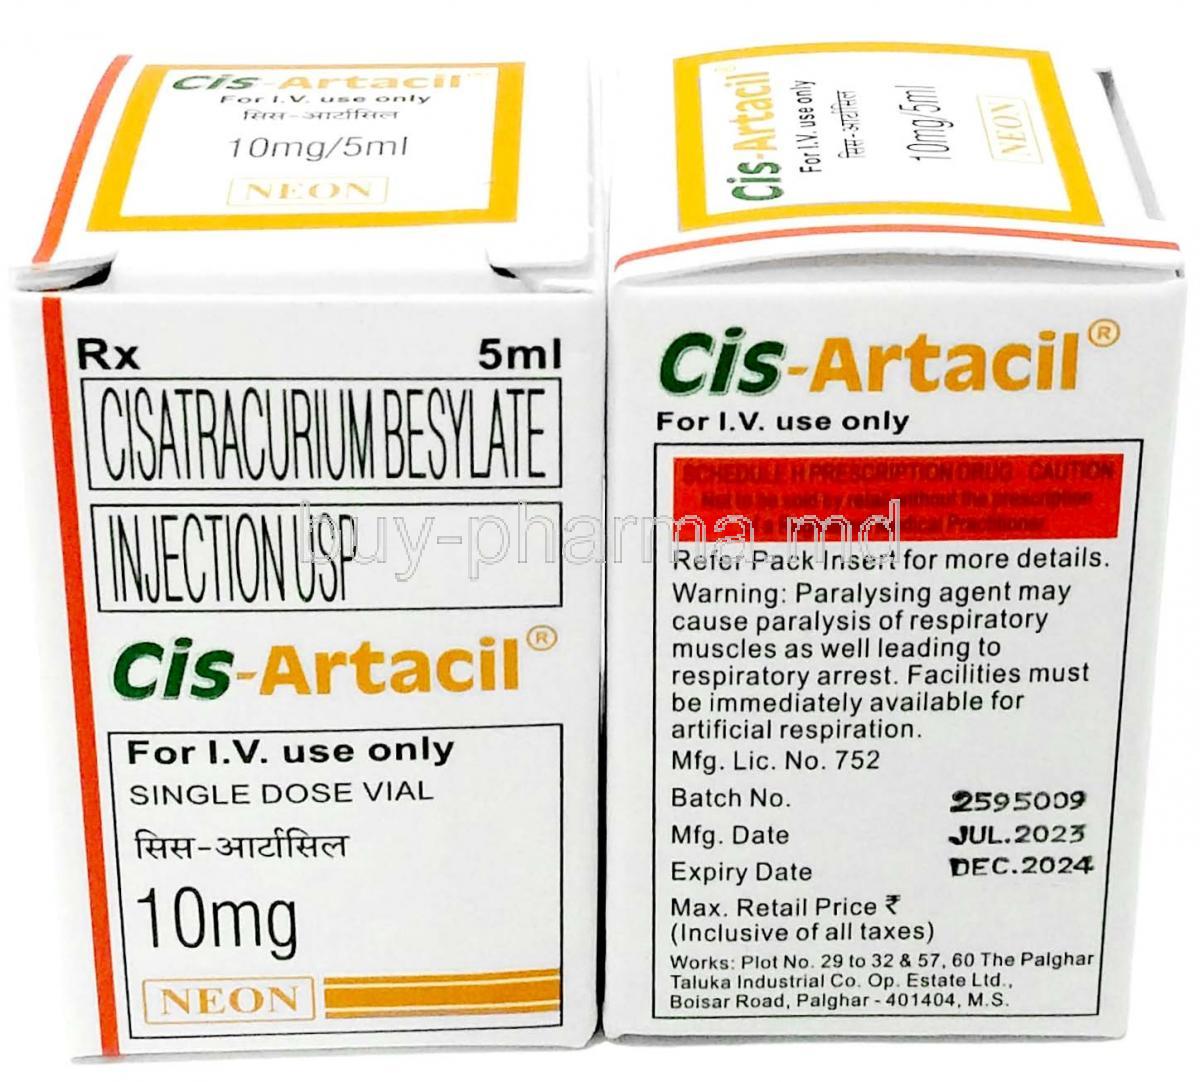 Cis-Artacil Injection, Cisatracurium 10mg,Injection Vial 5mL, Neon Laboratories Ltd, Box front view, information